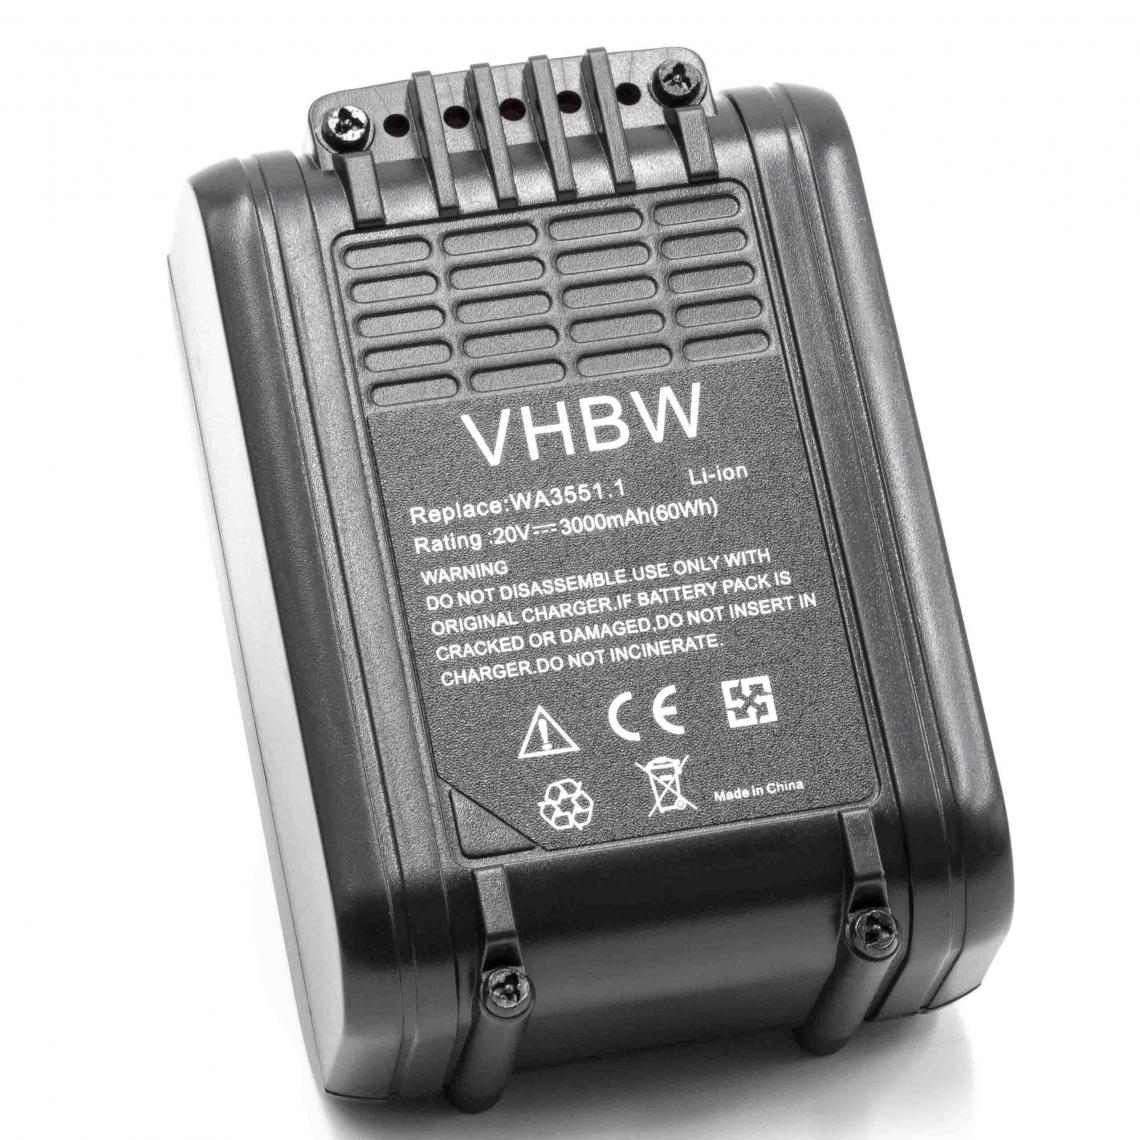 Vhbw - vhbw Batterie compatible avec Worx WG548E.9, WG549, WG549E, WG549E.5, WG549E.9, WG584E outil électrique (3000mAh Li-ion 20 V) - Clouterie